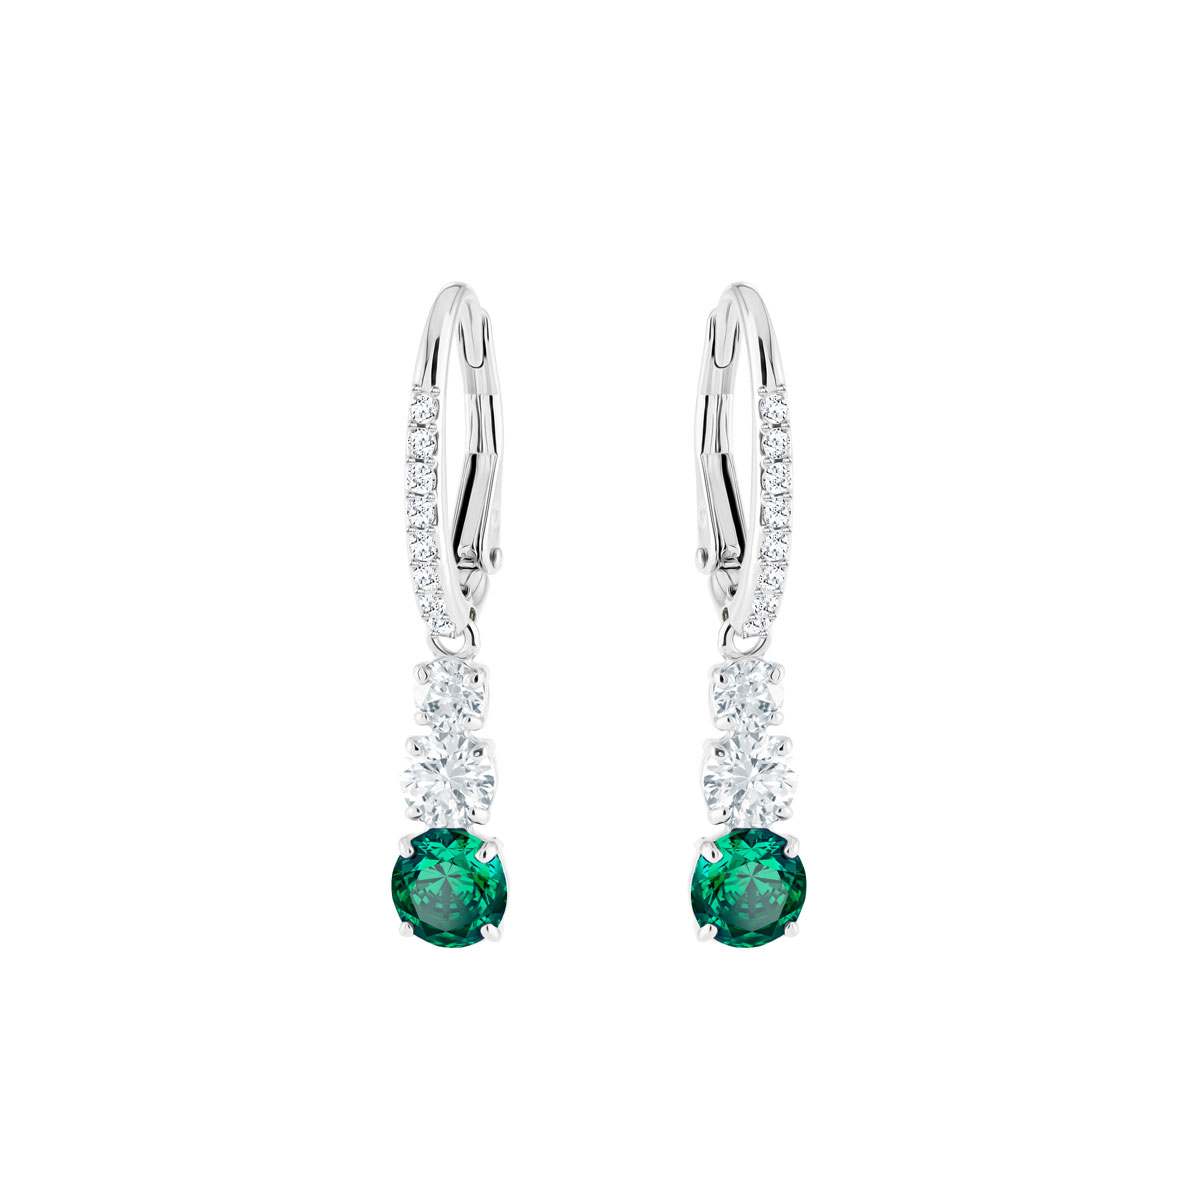 Swarovski Attract Trilogy Round Pierced Earrings, Green, Rhodium